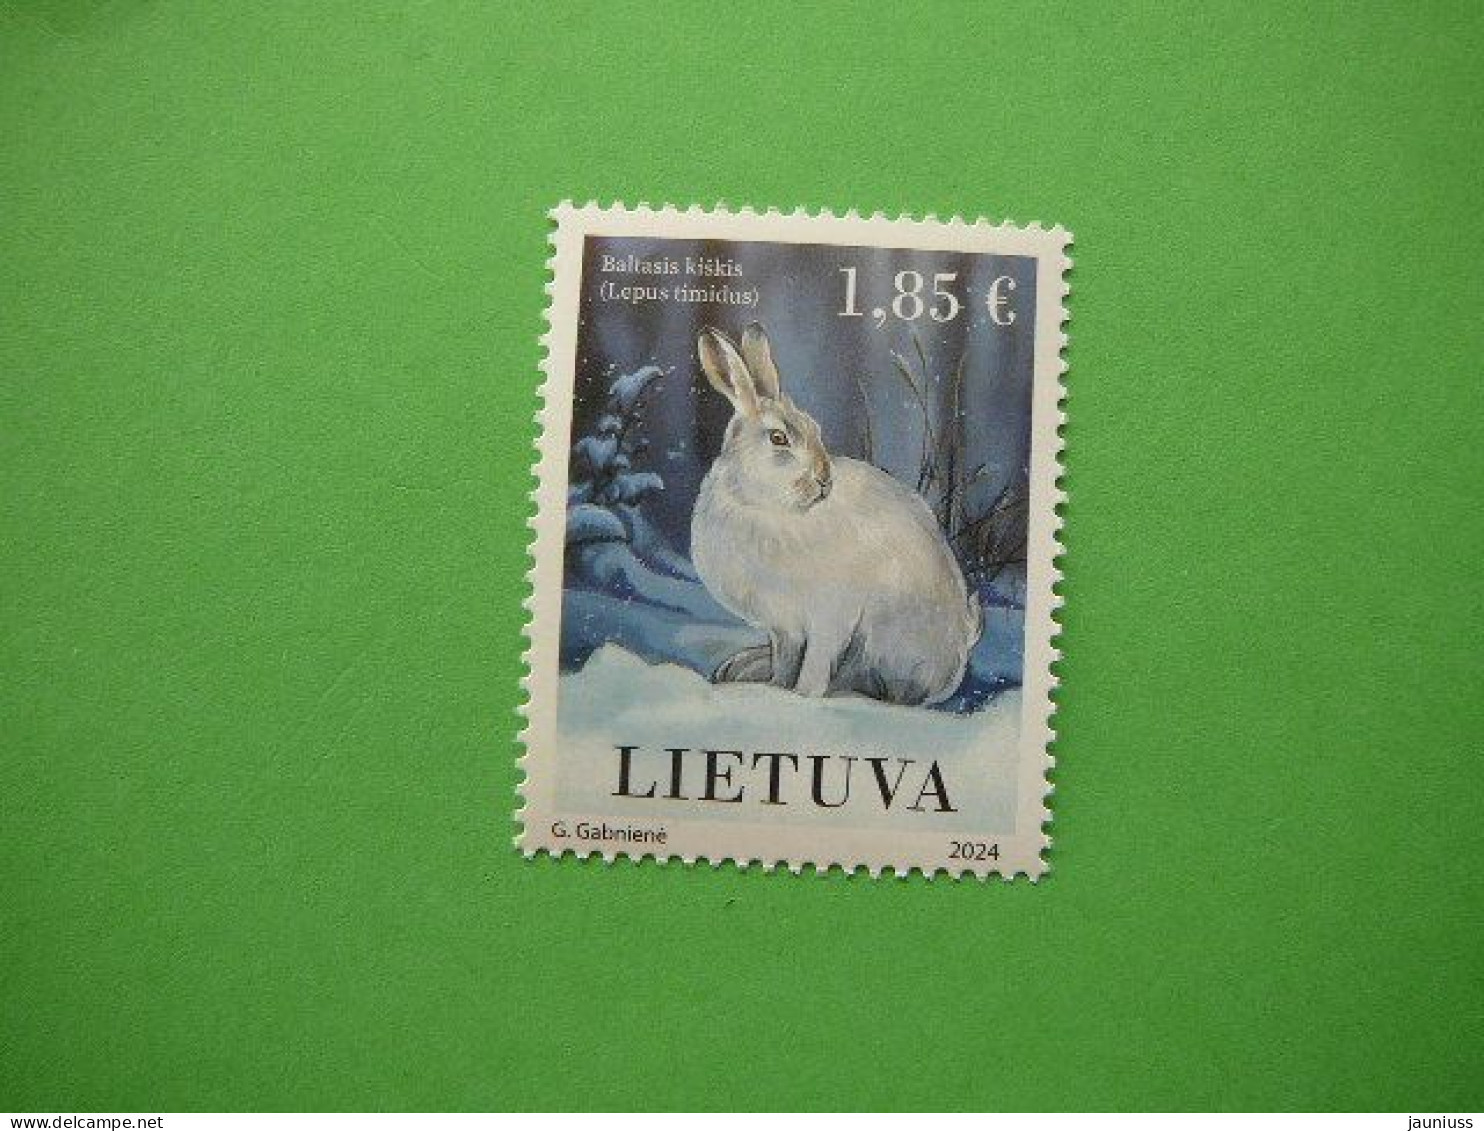 White Hare # Lietuva Litauen Lituanie Litouwen Lithuania # 2024 MNH #1 The Red Book - Lituania